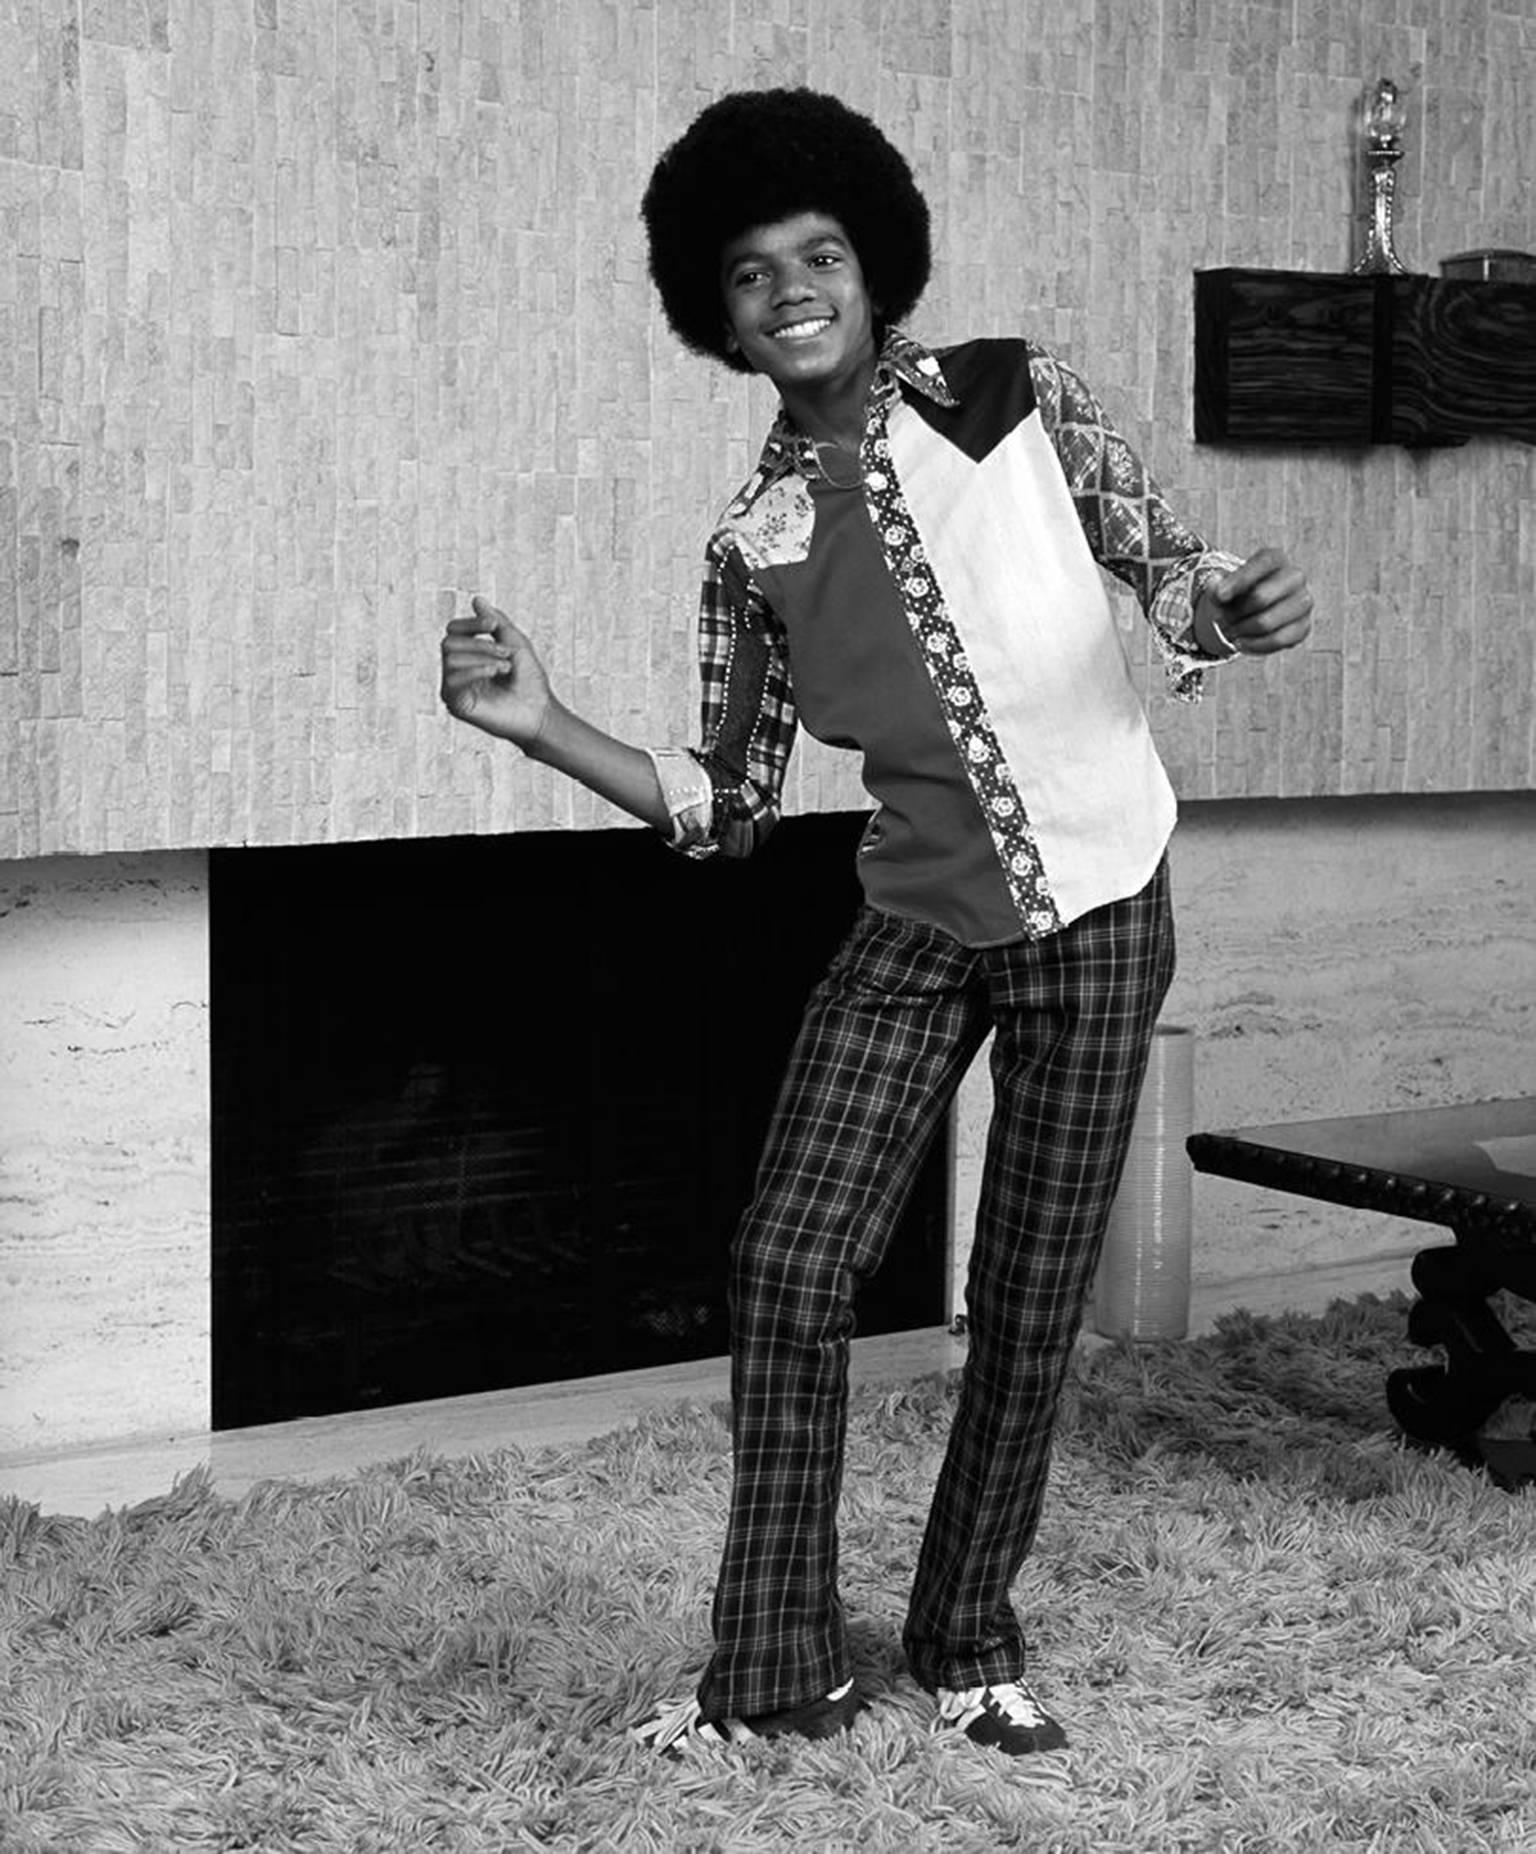 John R. Hamilton Black and White Photograph - Michael Jackson, at home, 1974